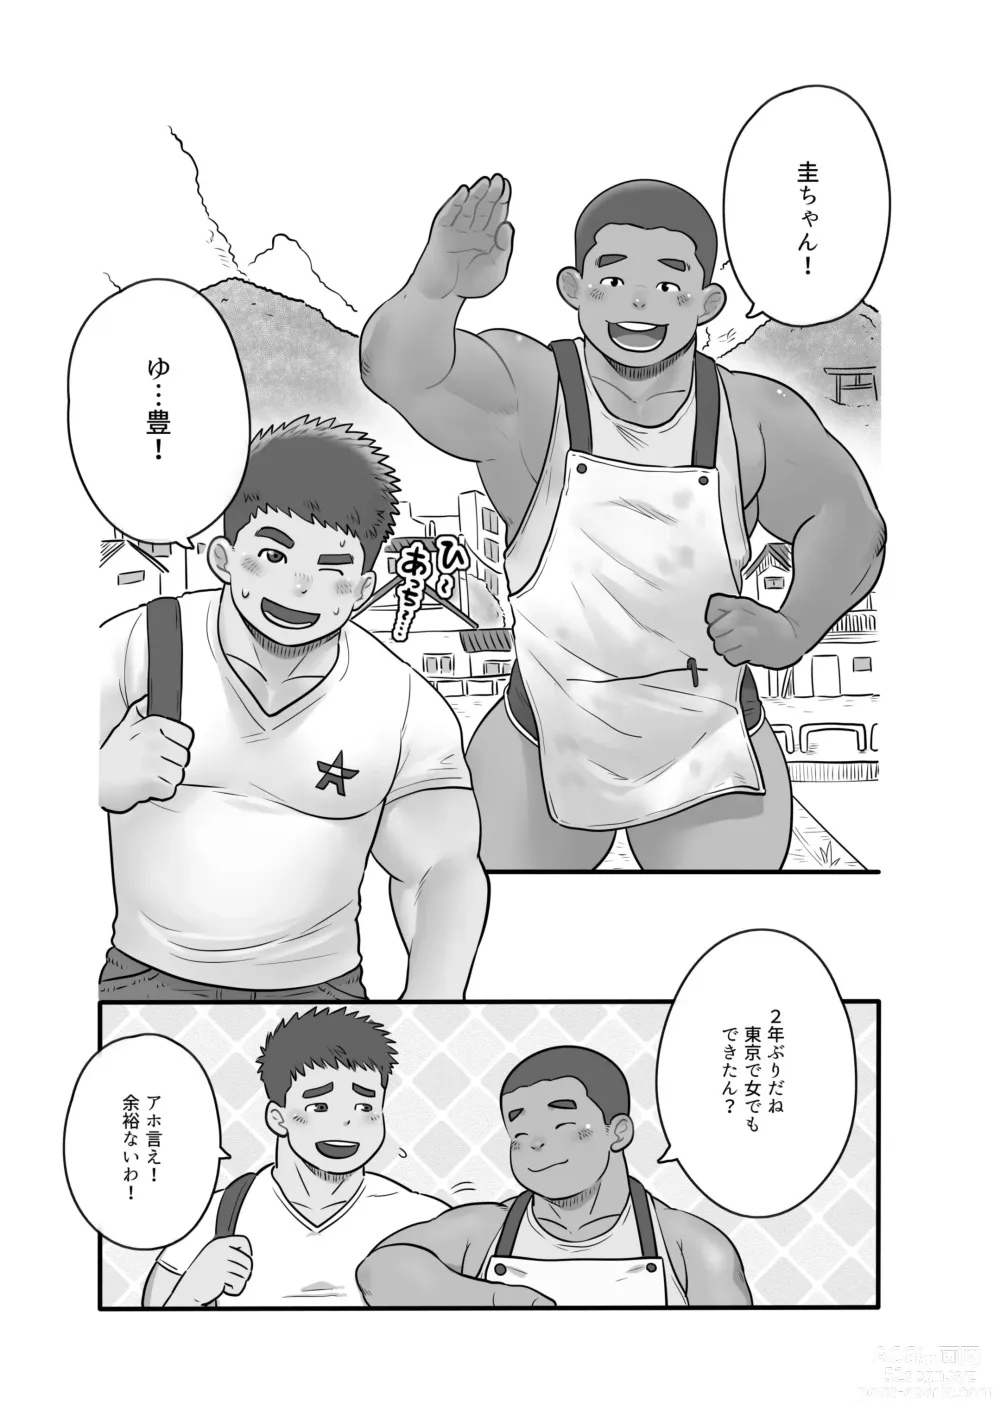 Page 2 of doujinshi Kawaranai Kimi e